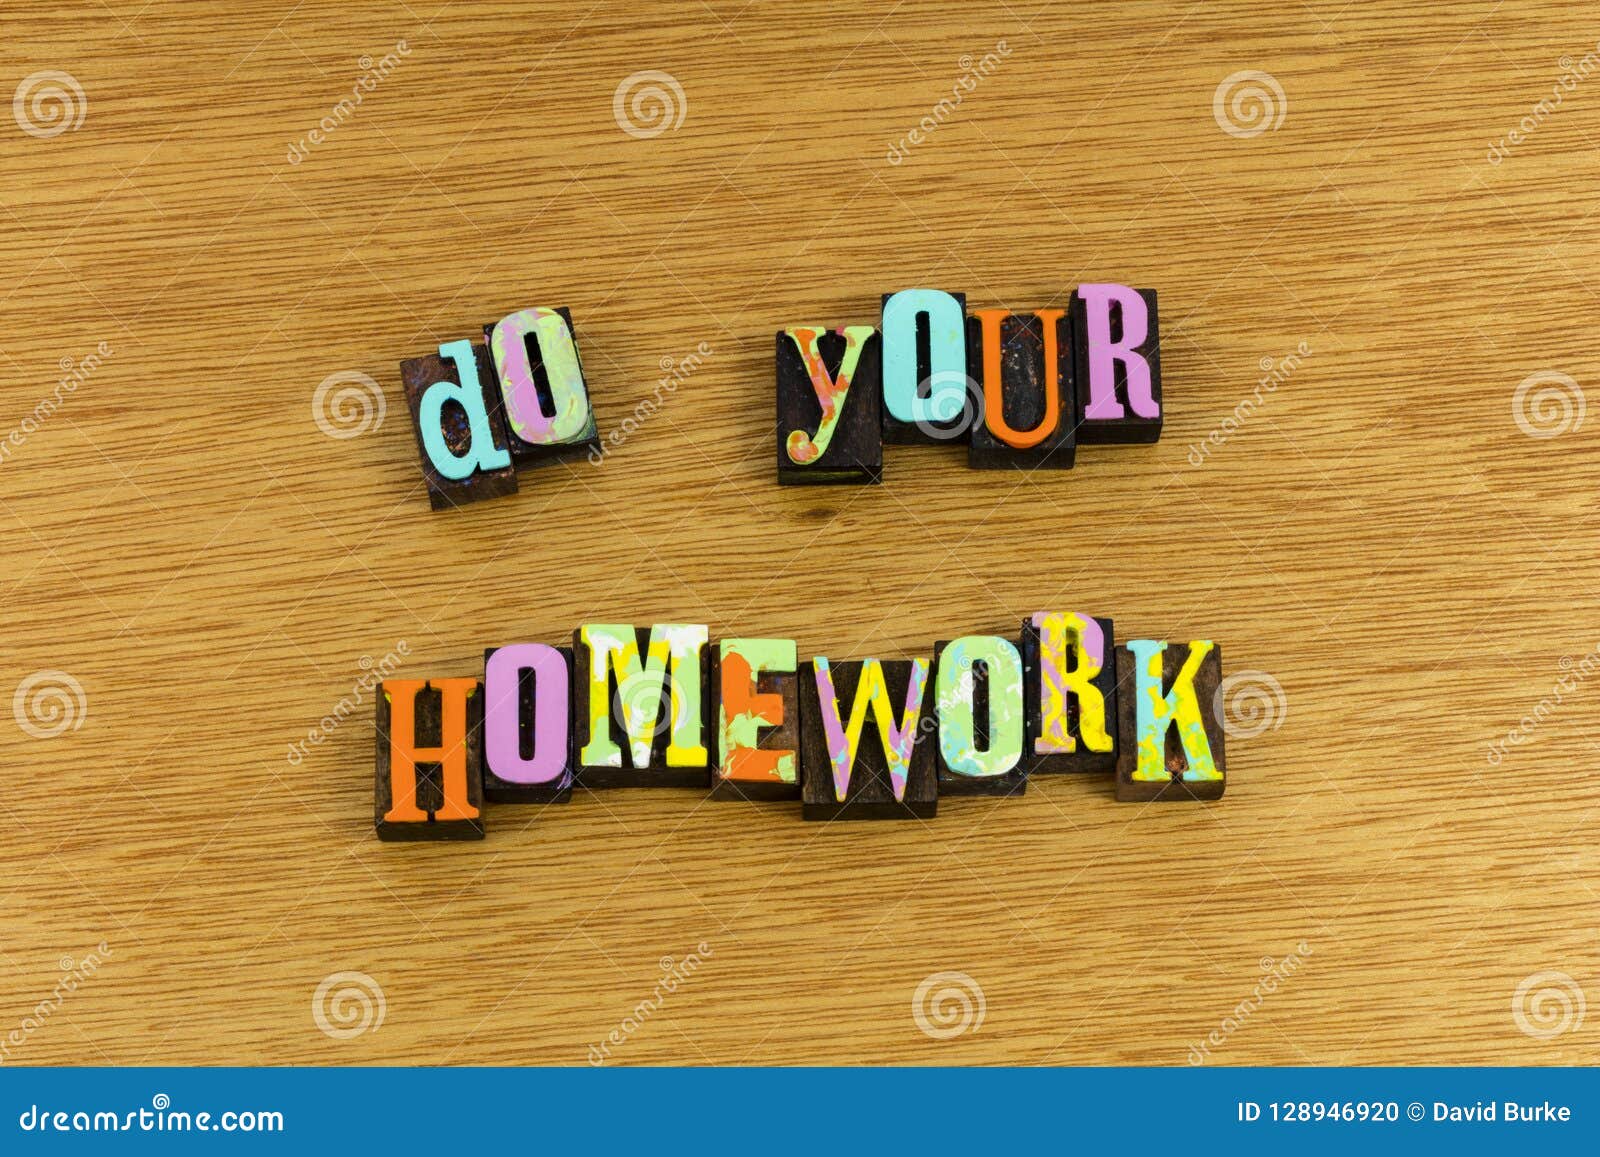 homework learning preparation job training home work instruction